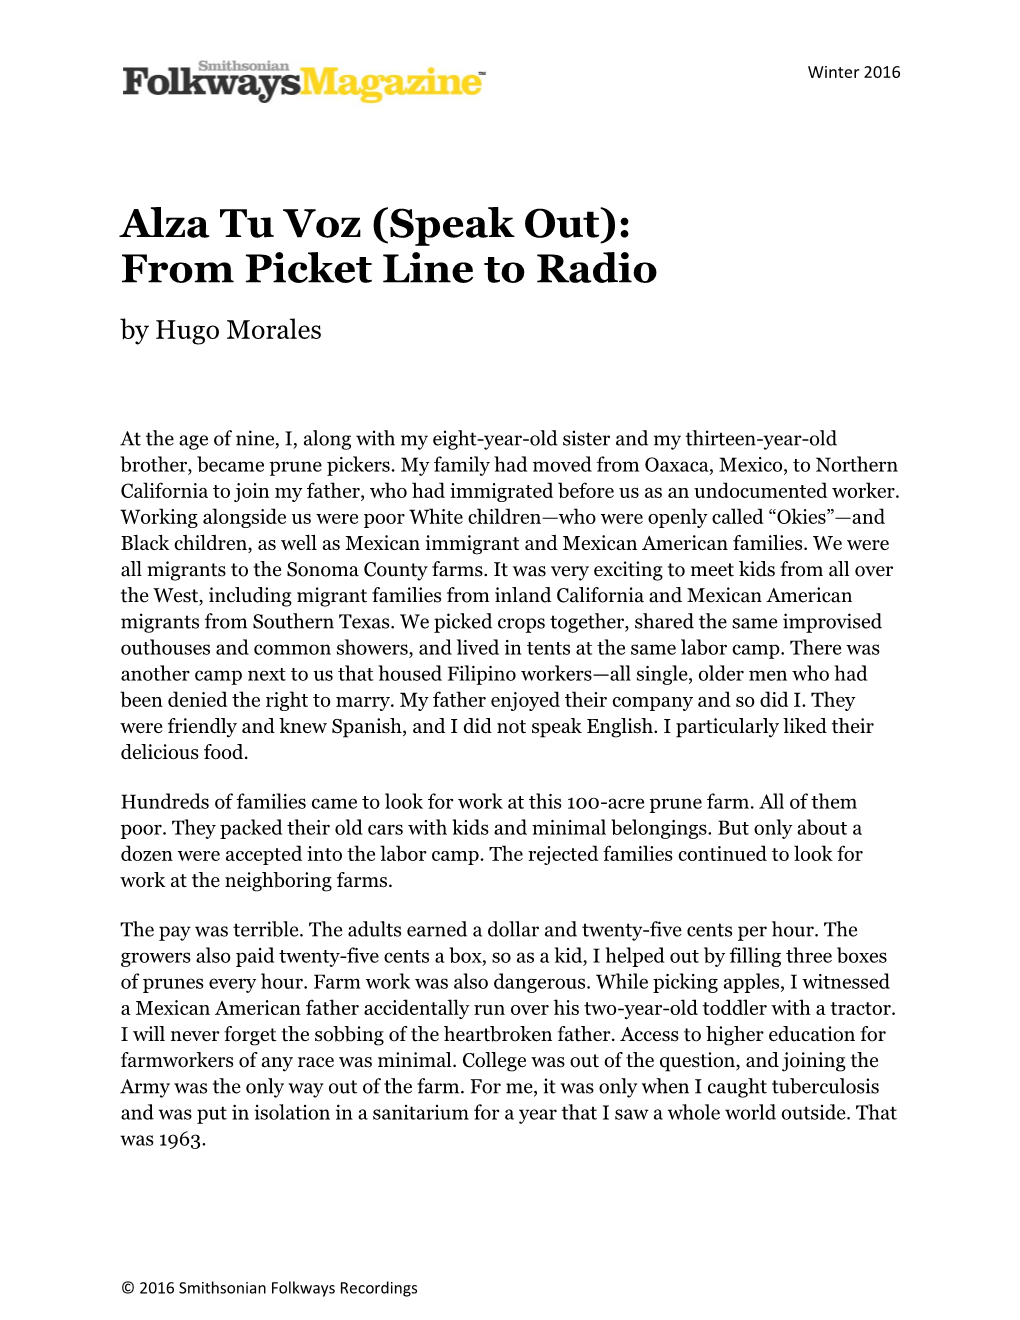 Alza Tu Voz (Speak Out): from Picket Line to Radio by Hugo Morales